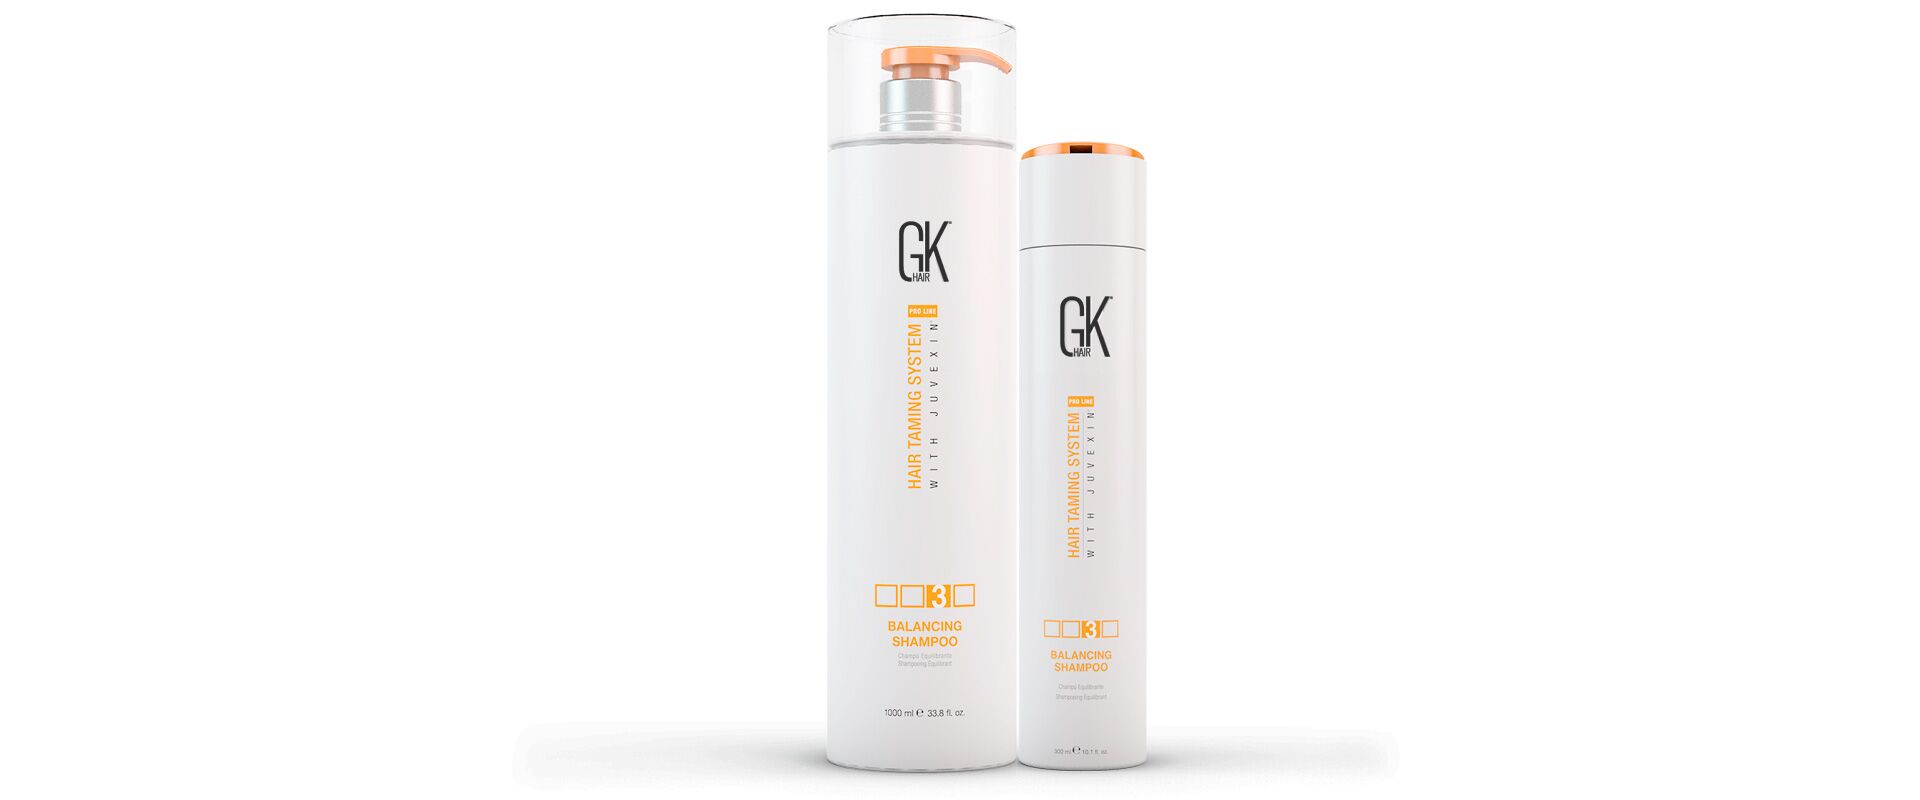 Балансирующий шампунь Balancing shampoo (Global Keratin) 300ml